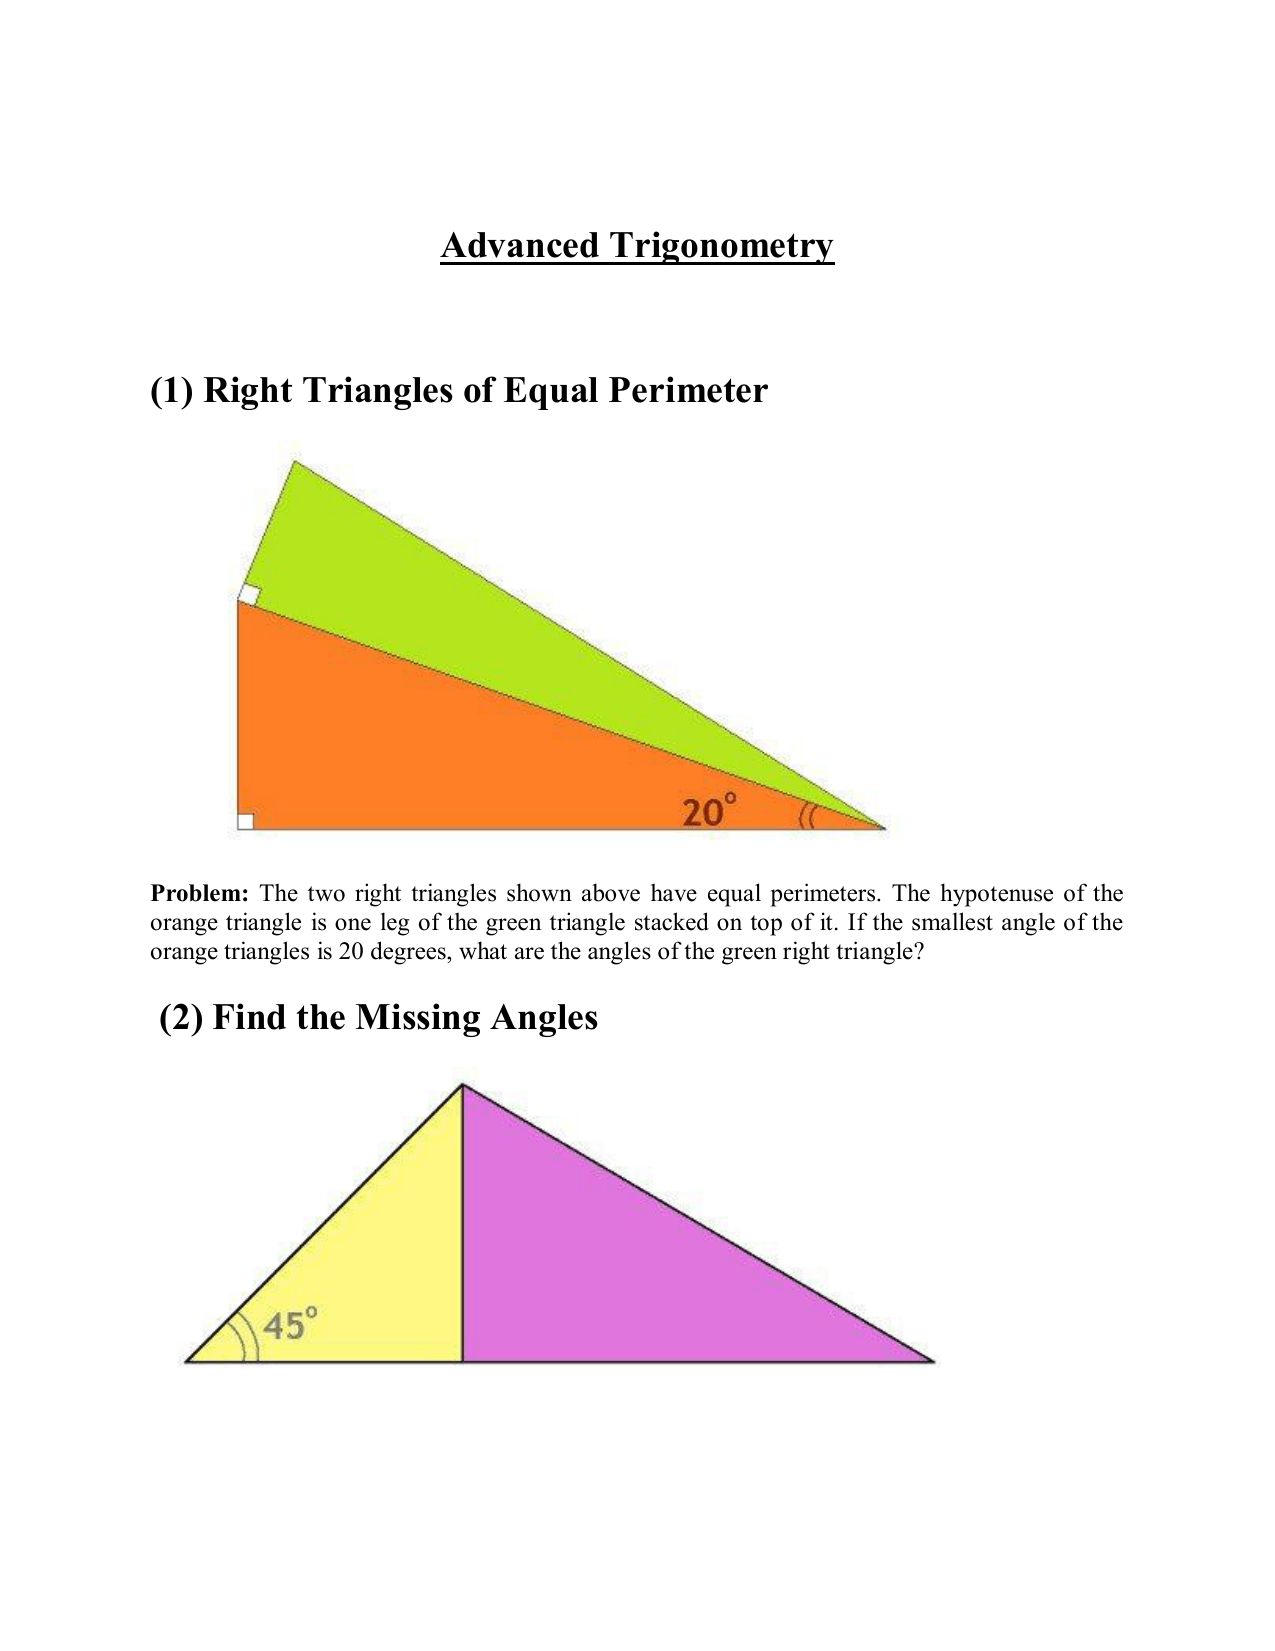 Two Orange Triangle Logo - Advanced Trigonometry (1) Right Triangles of Equal Perimeter (2